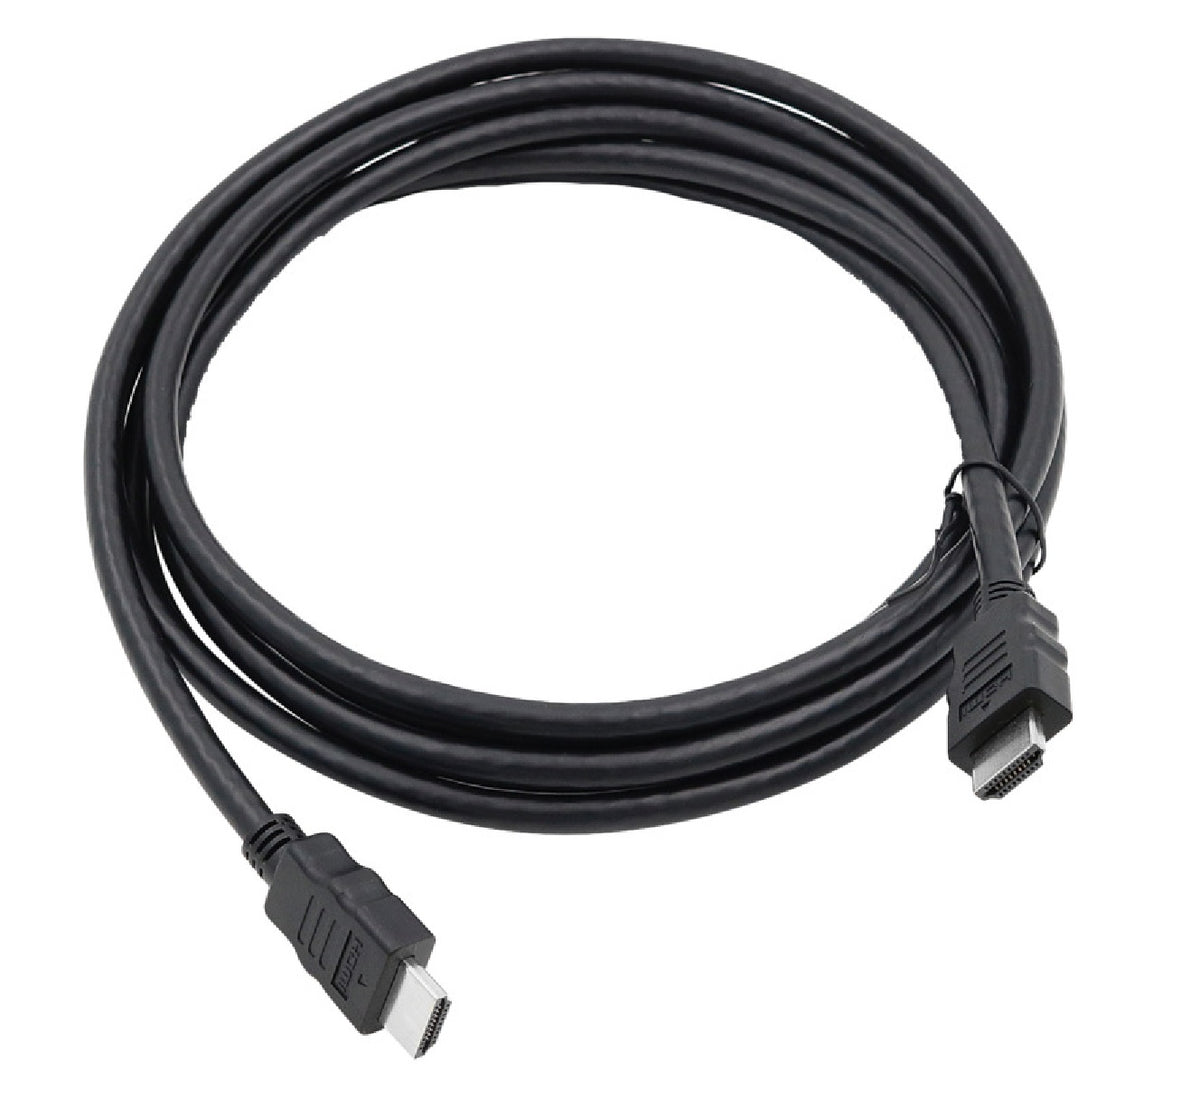 Powerzone ORHDMI02 High Speed HDMI Cable, 8 Feet, Black